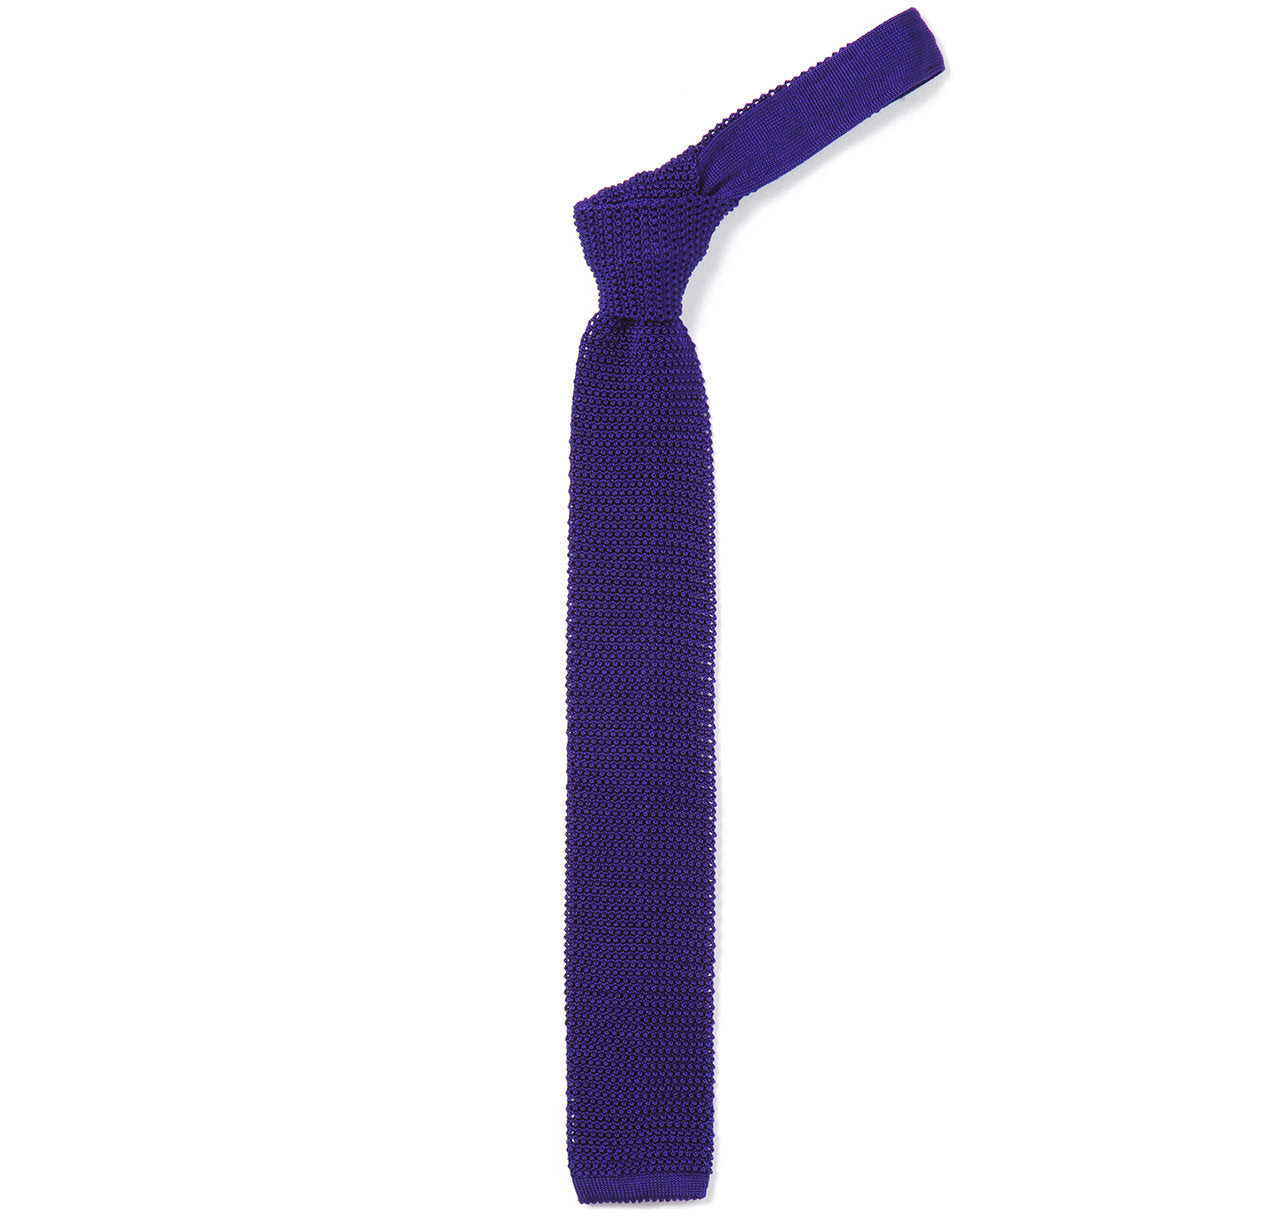 Sir Jack's Classic Knit Silk Tie in Violet Purple